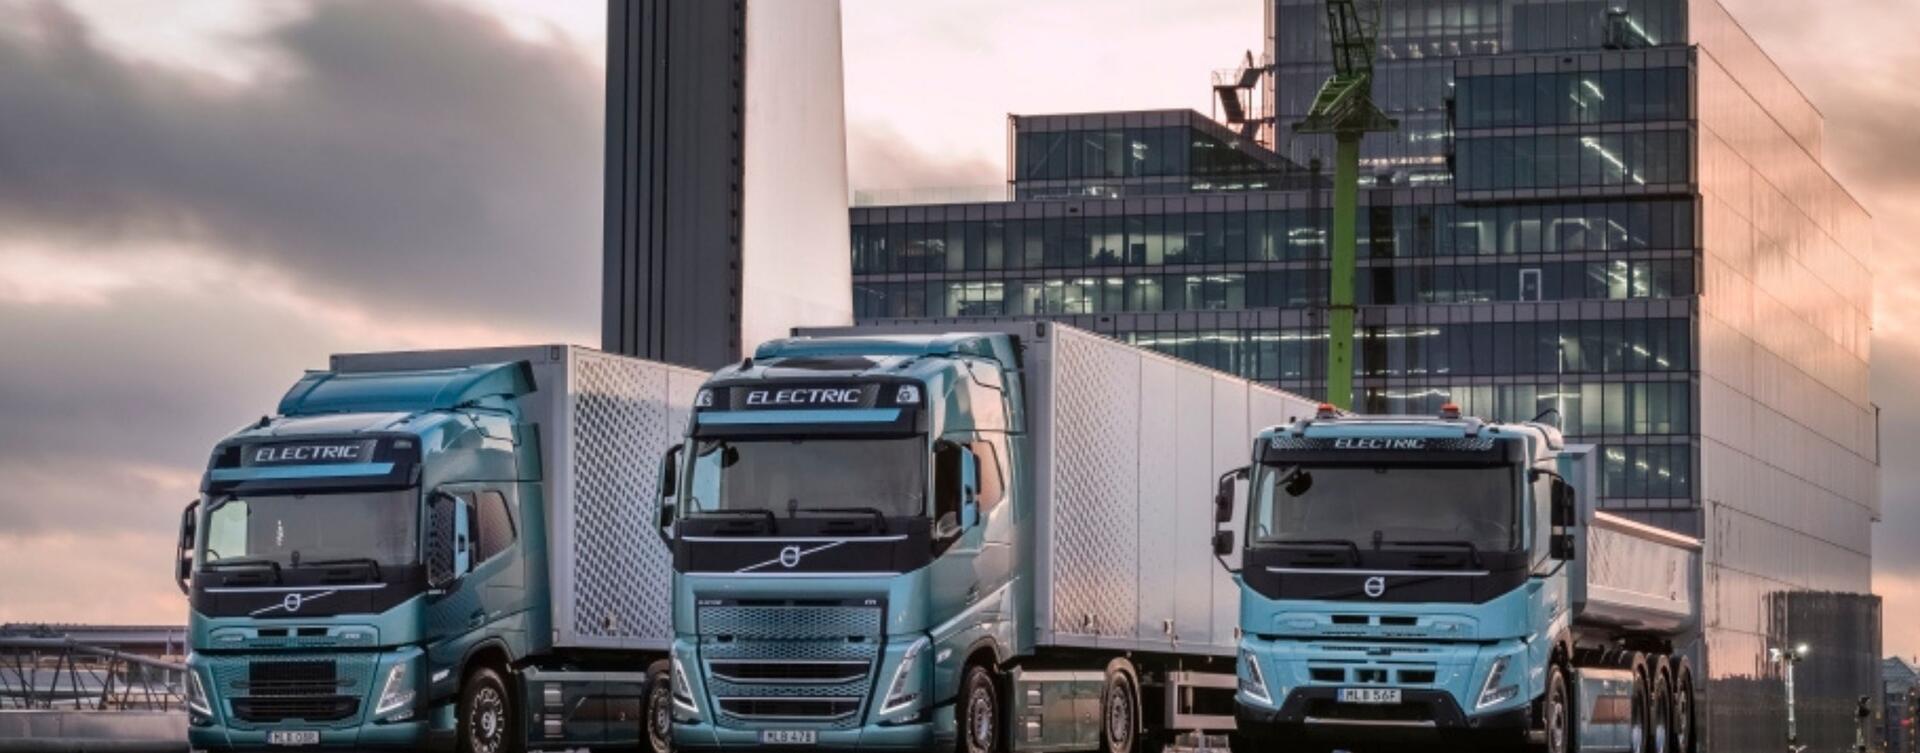 Technologie van nieuwe elektrische Volvo trucks onthult